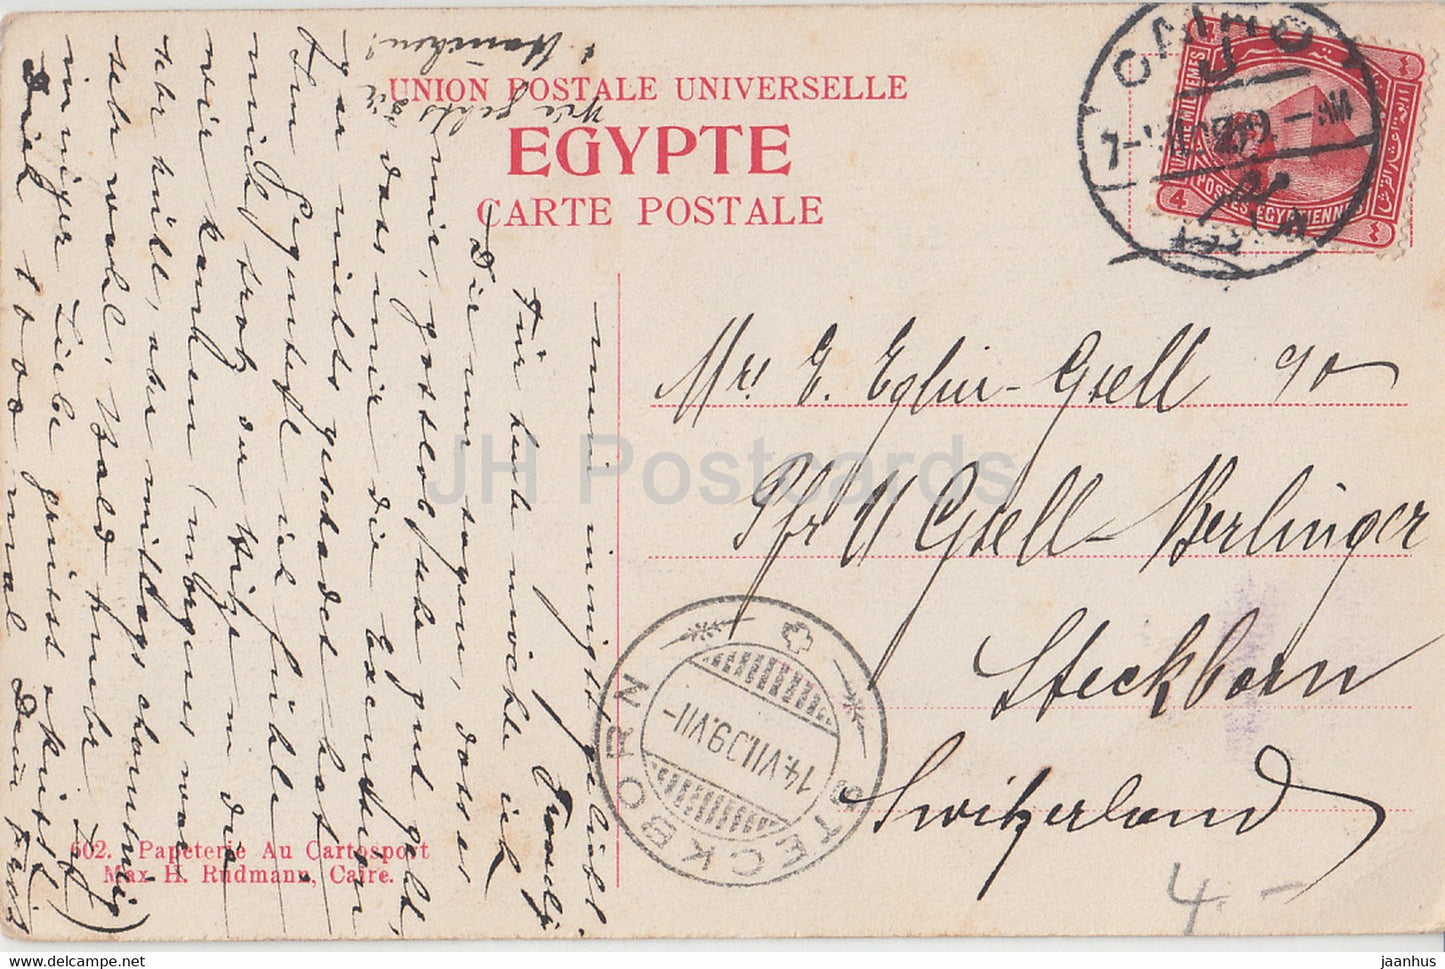 Kairo - Le Caire - Mosquee el Azhar - Vue Generale des Minarets - alte Postkarte - 1909 - Ägypten - gebraucht